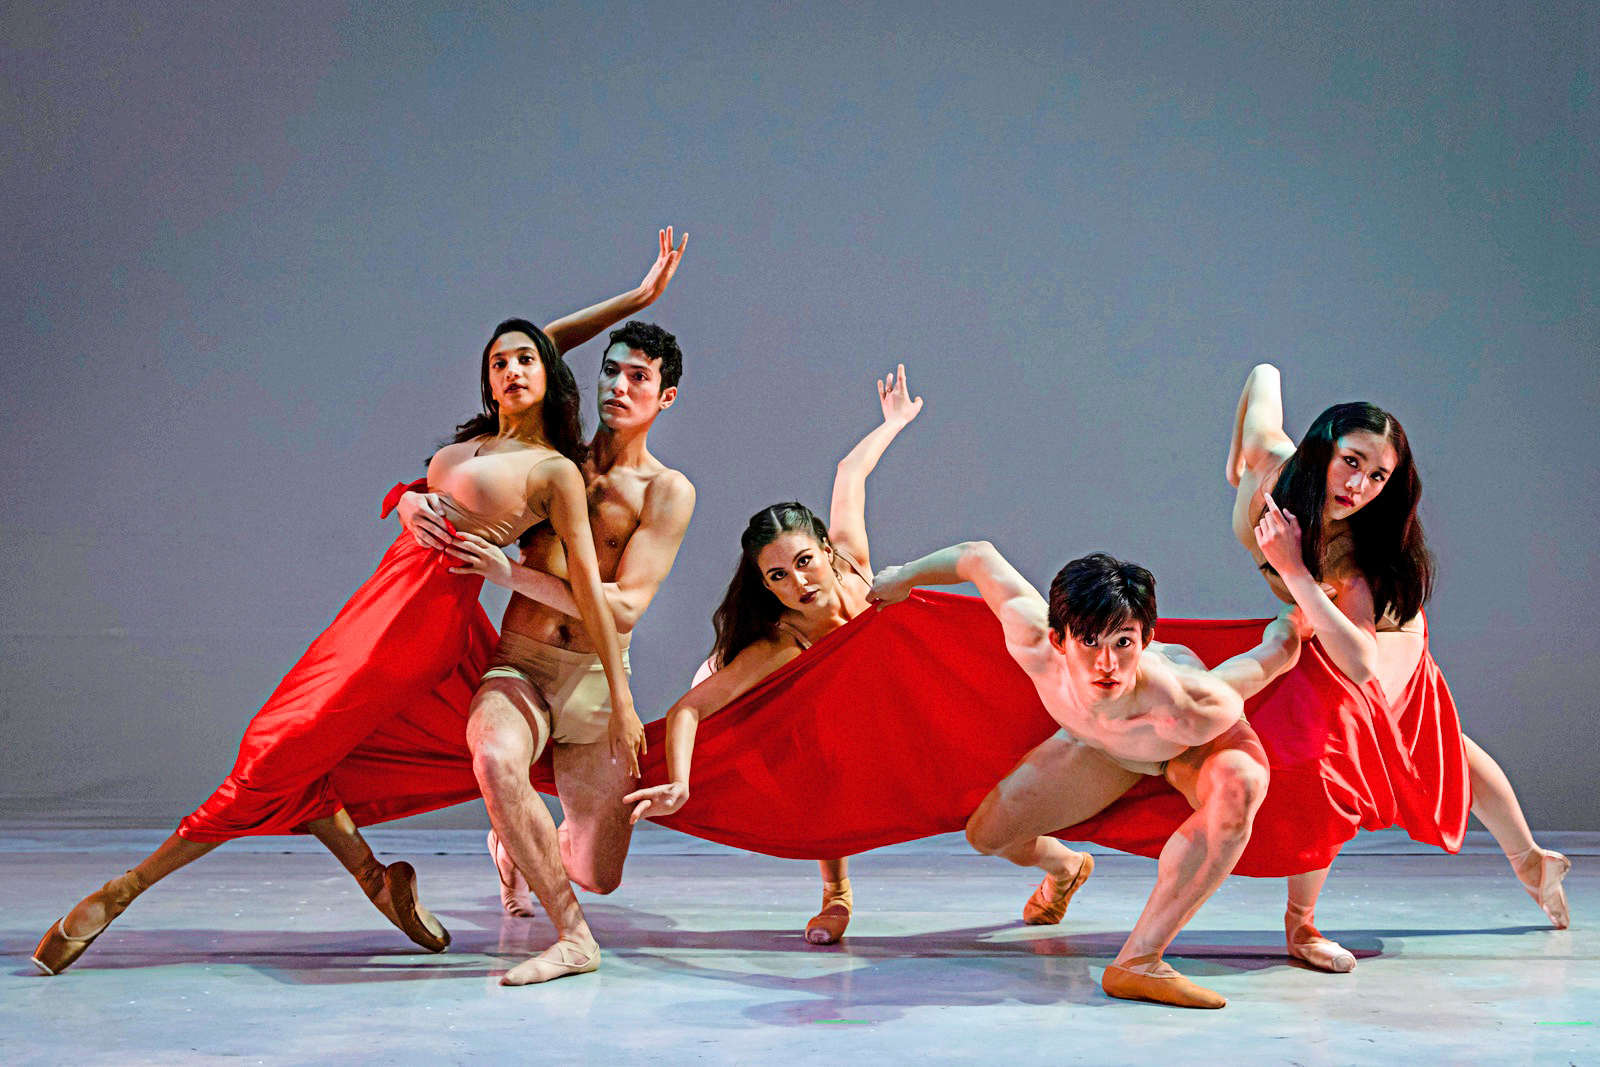 ariel panuelos recommends Naked Women In Ballet